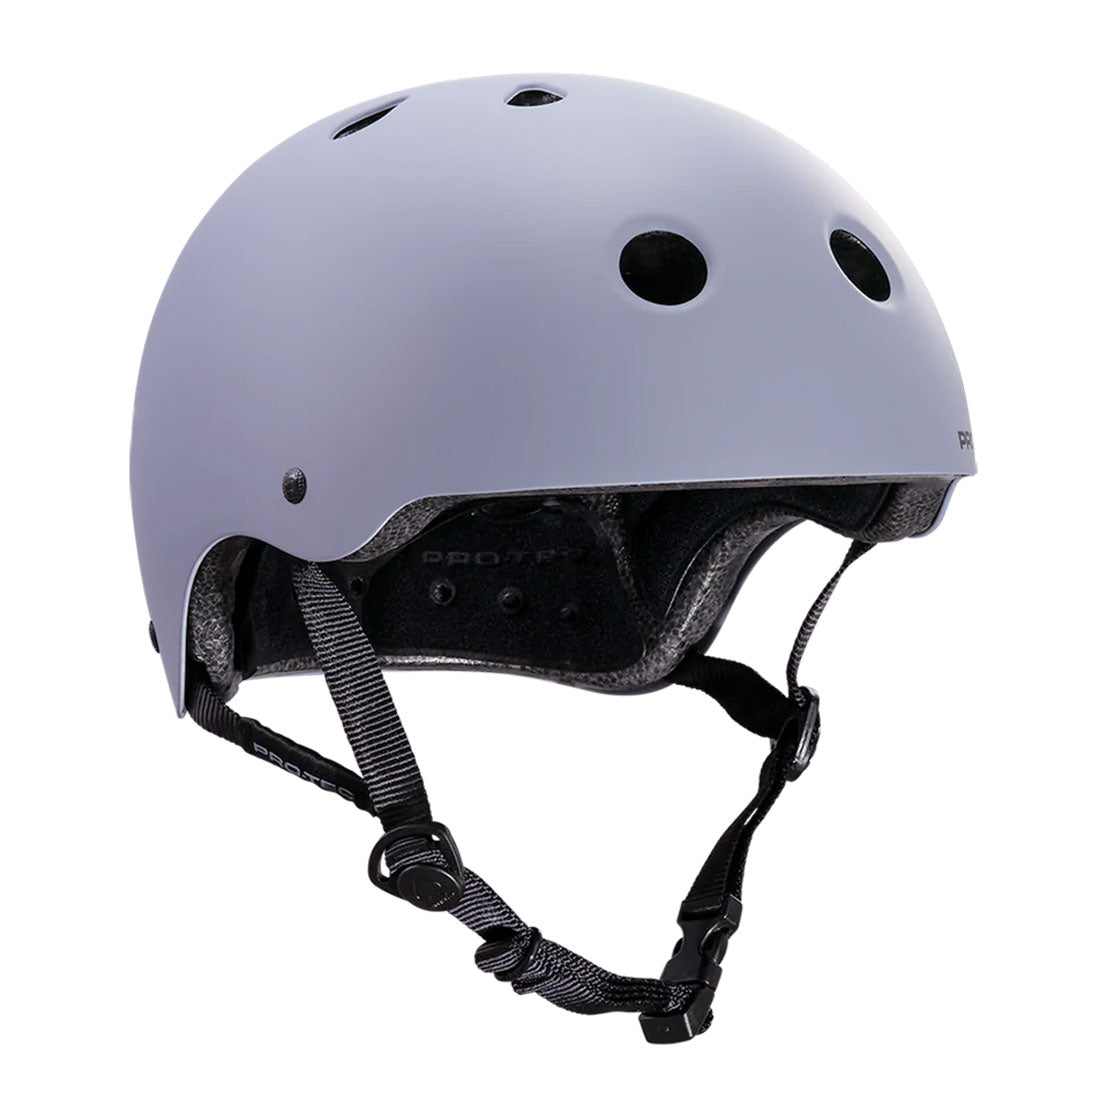 Pro-Tec Classic Cert Matte Lavender - Small Helmets